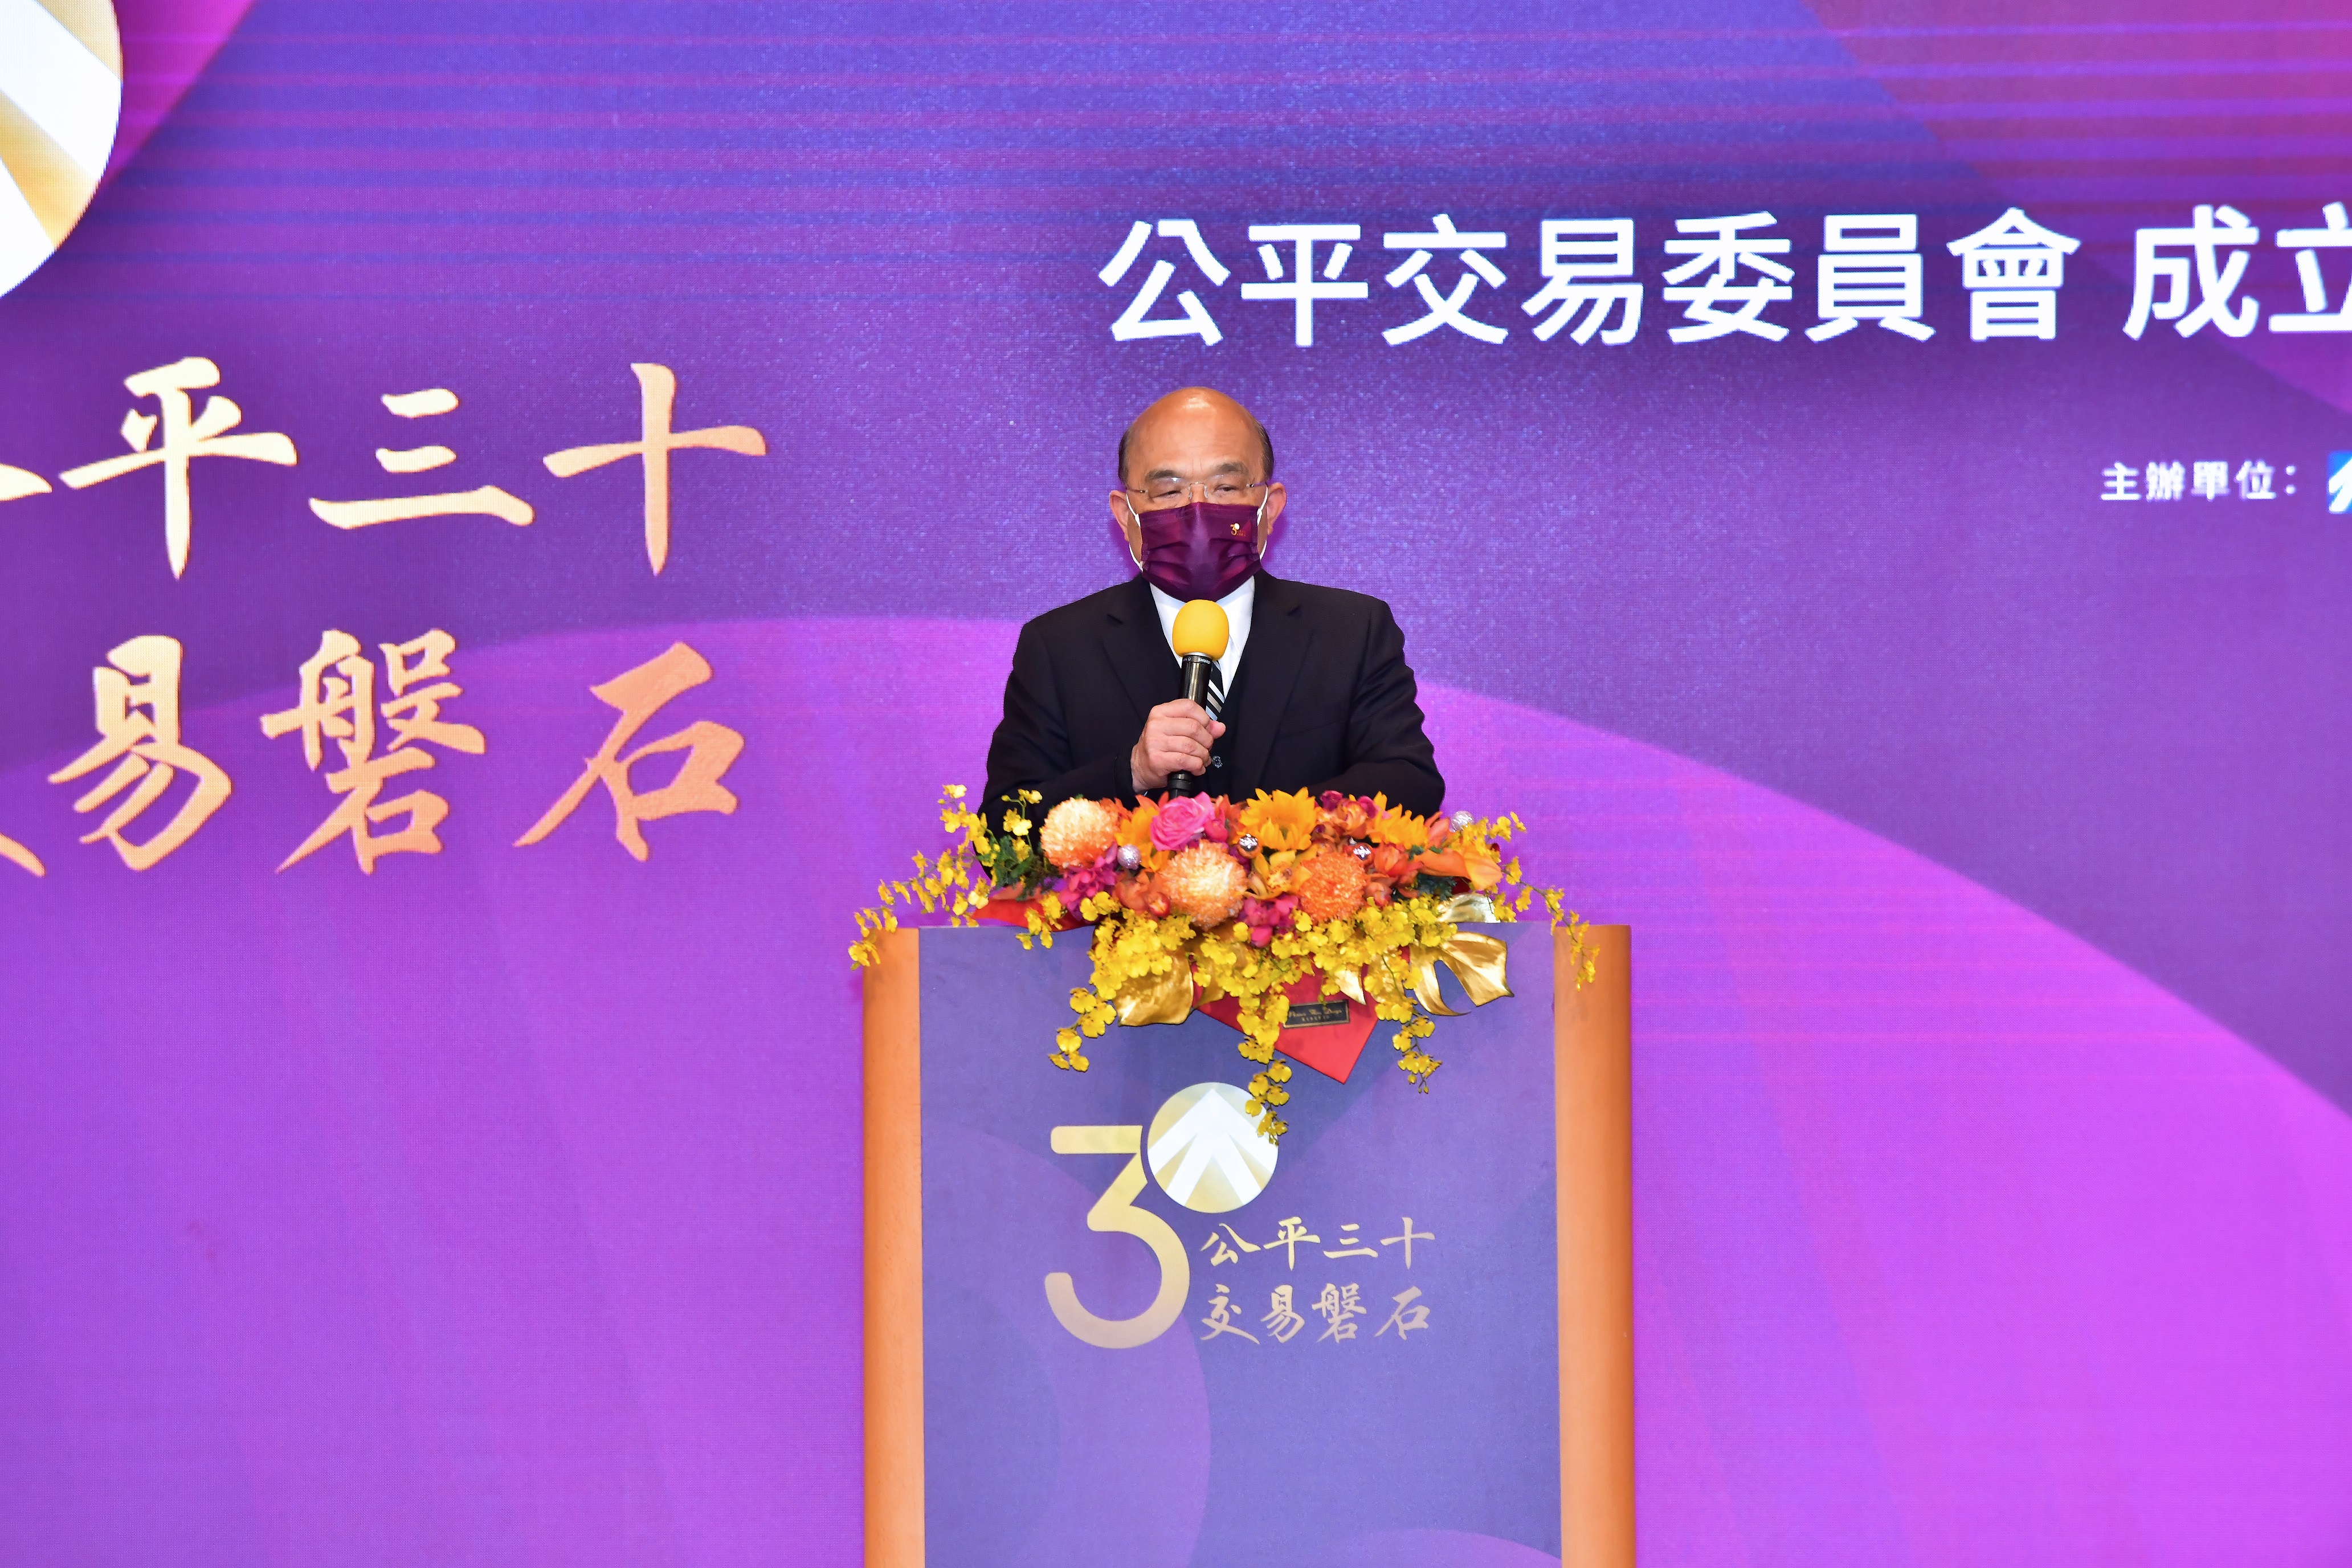 Premier Su Tseng-chang giving a speech during the FTC